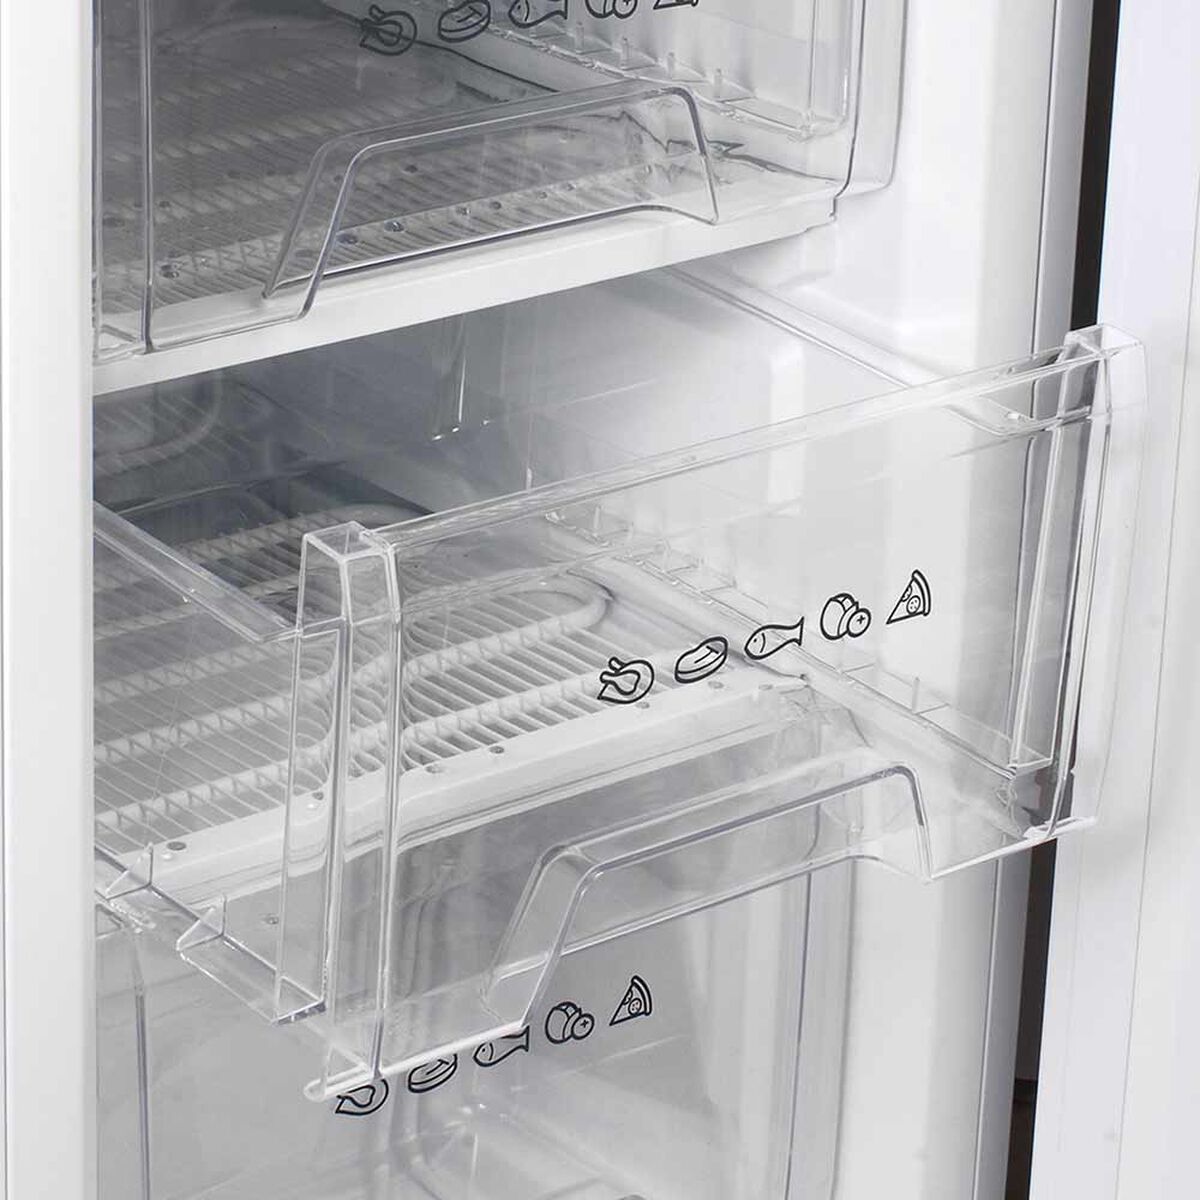 Refrigerador Frío Directo Midea MRFI 1800S 180 lt